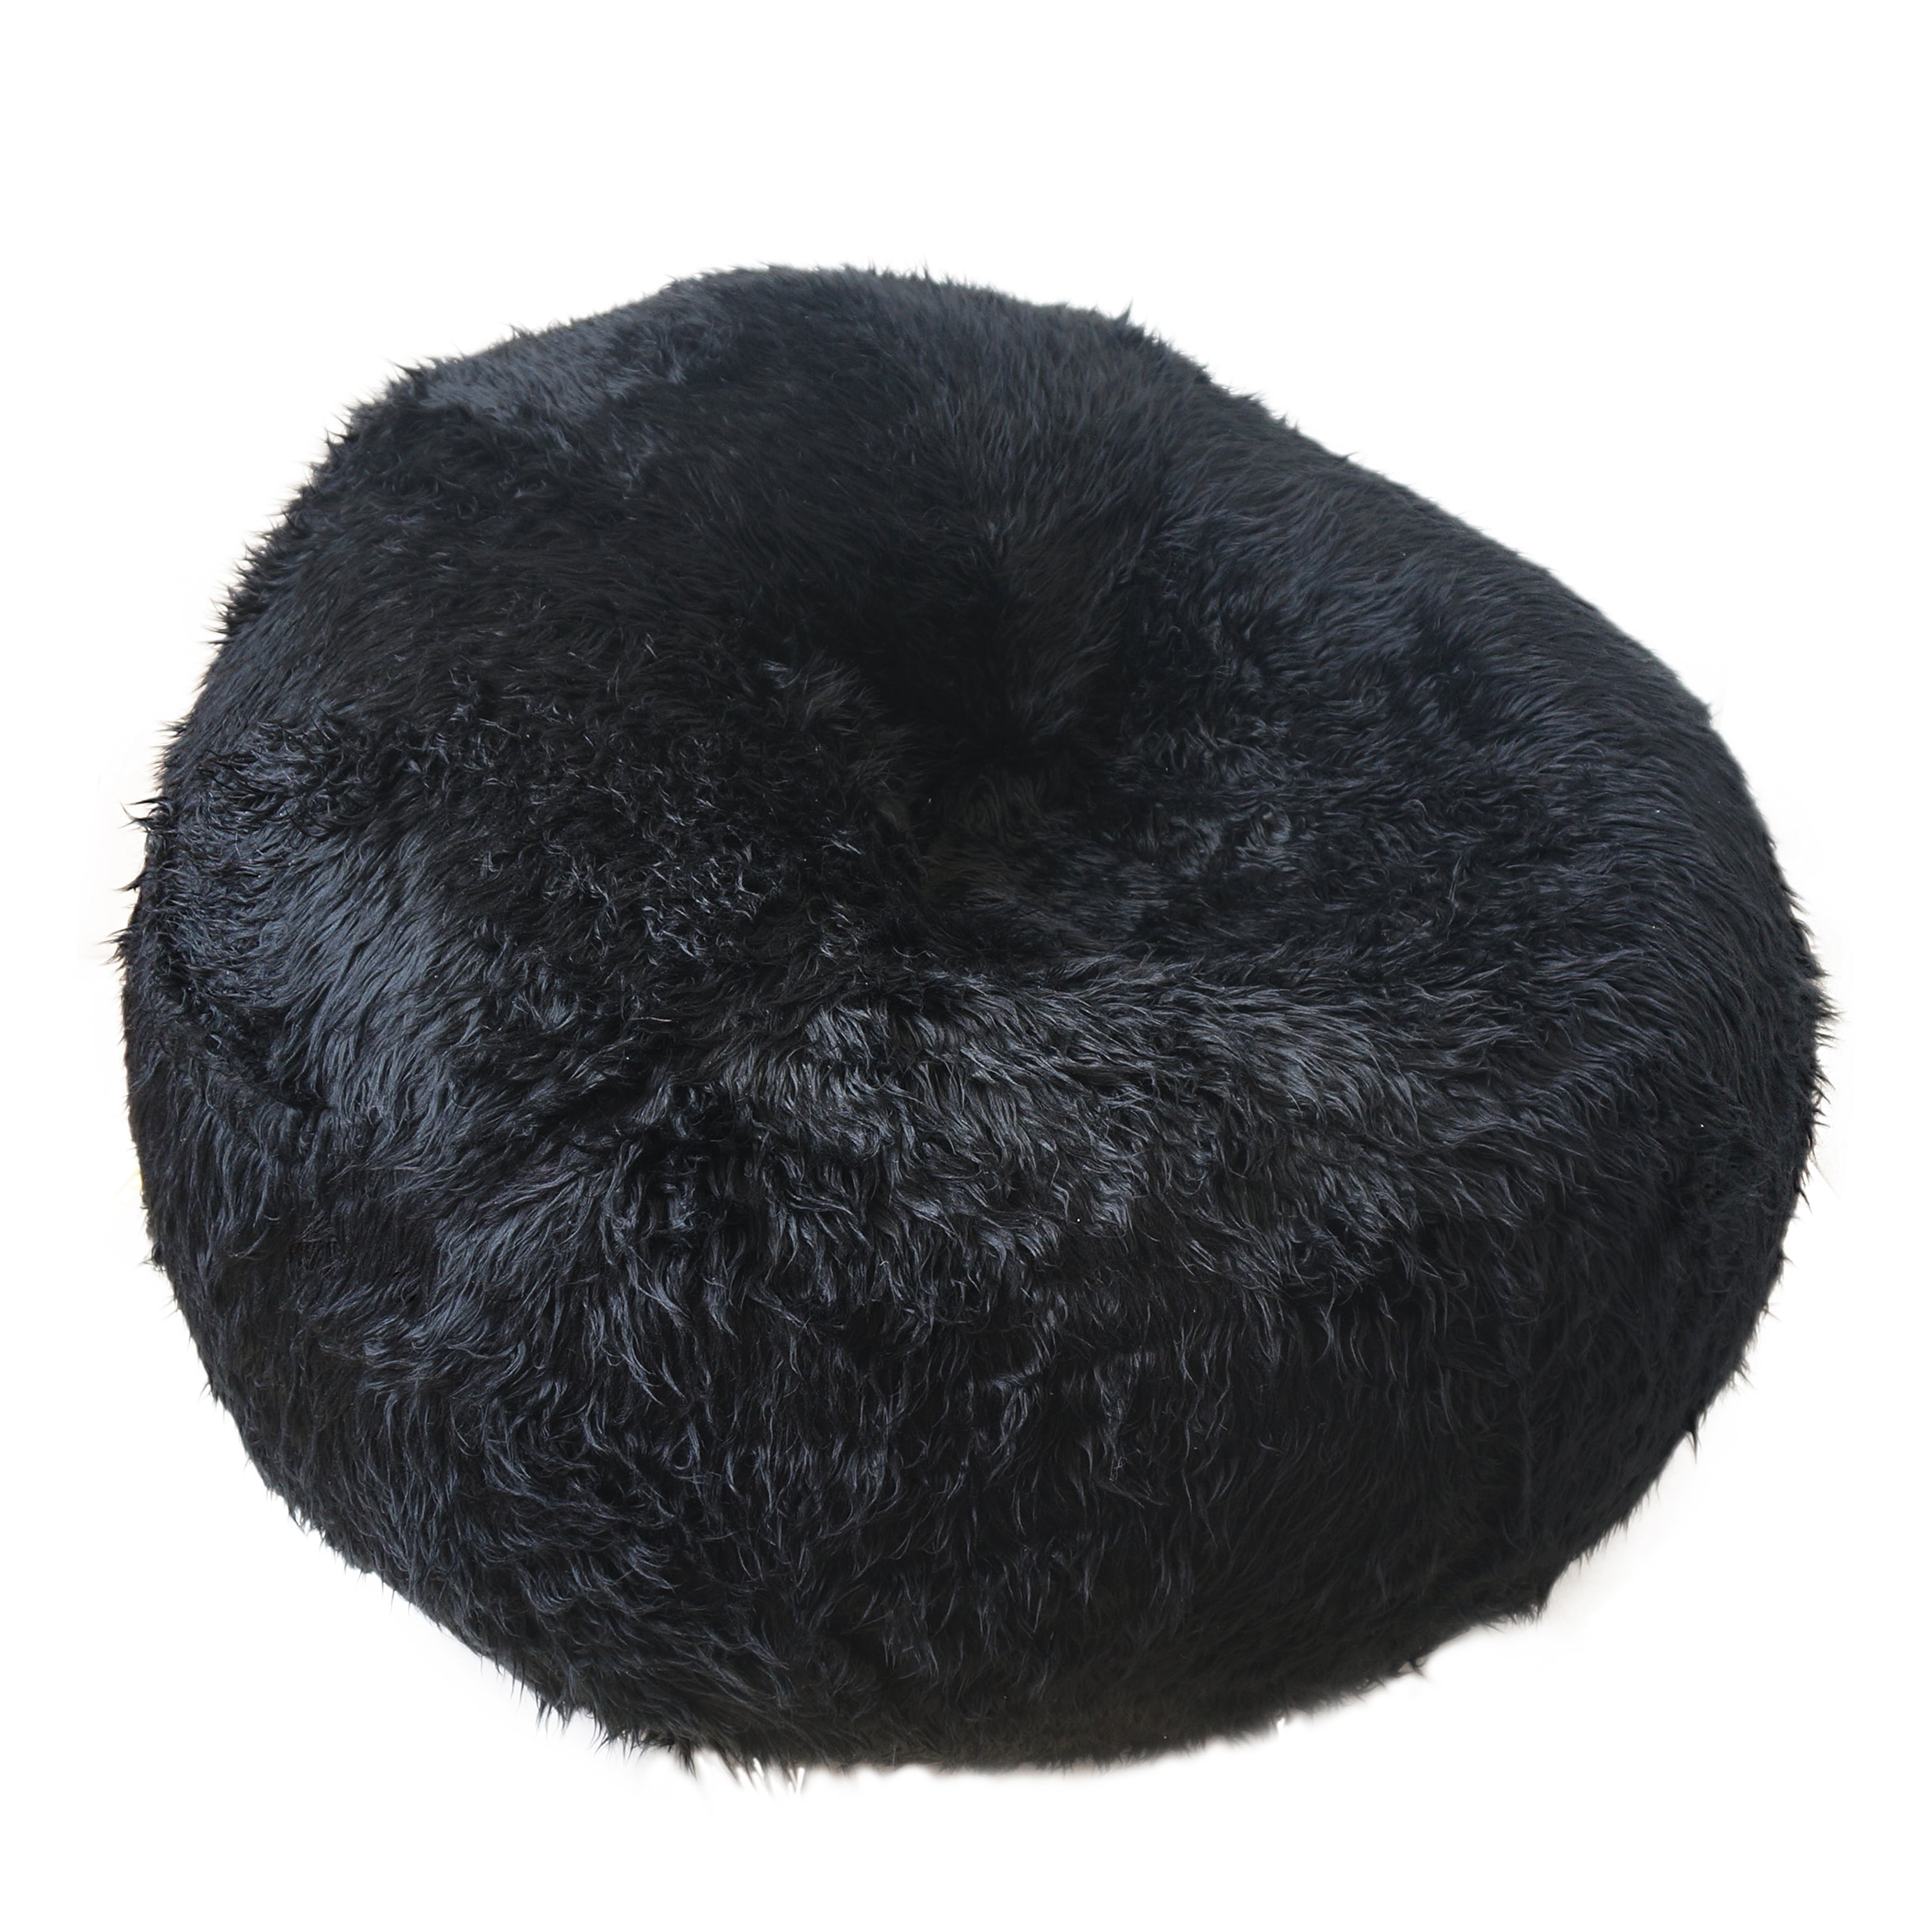 Galaxy Black Fur Slipcover Inflatable Chair - Walmart.com